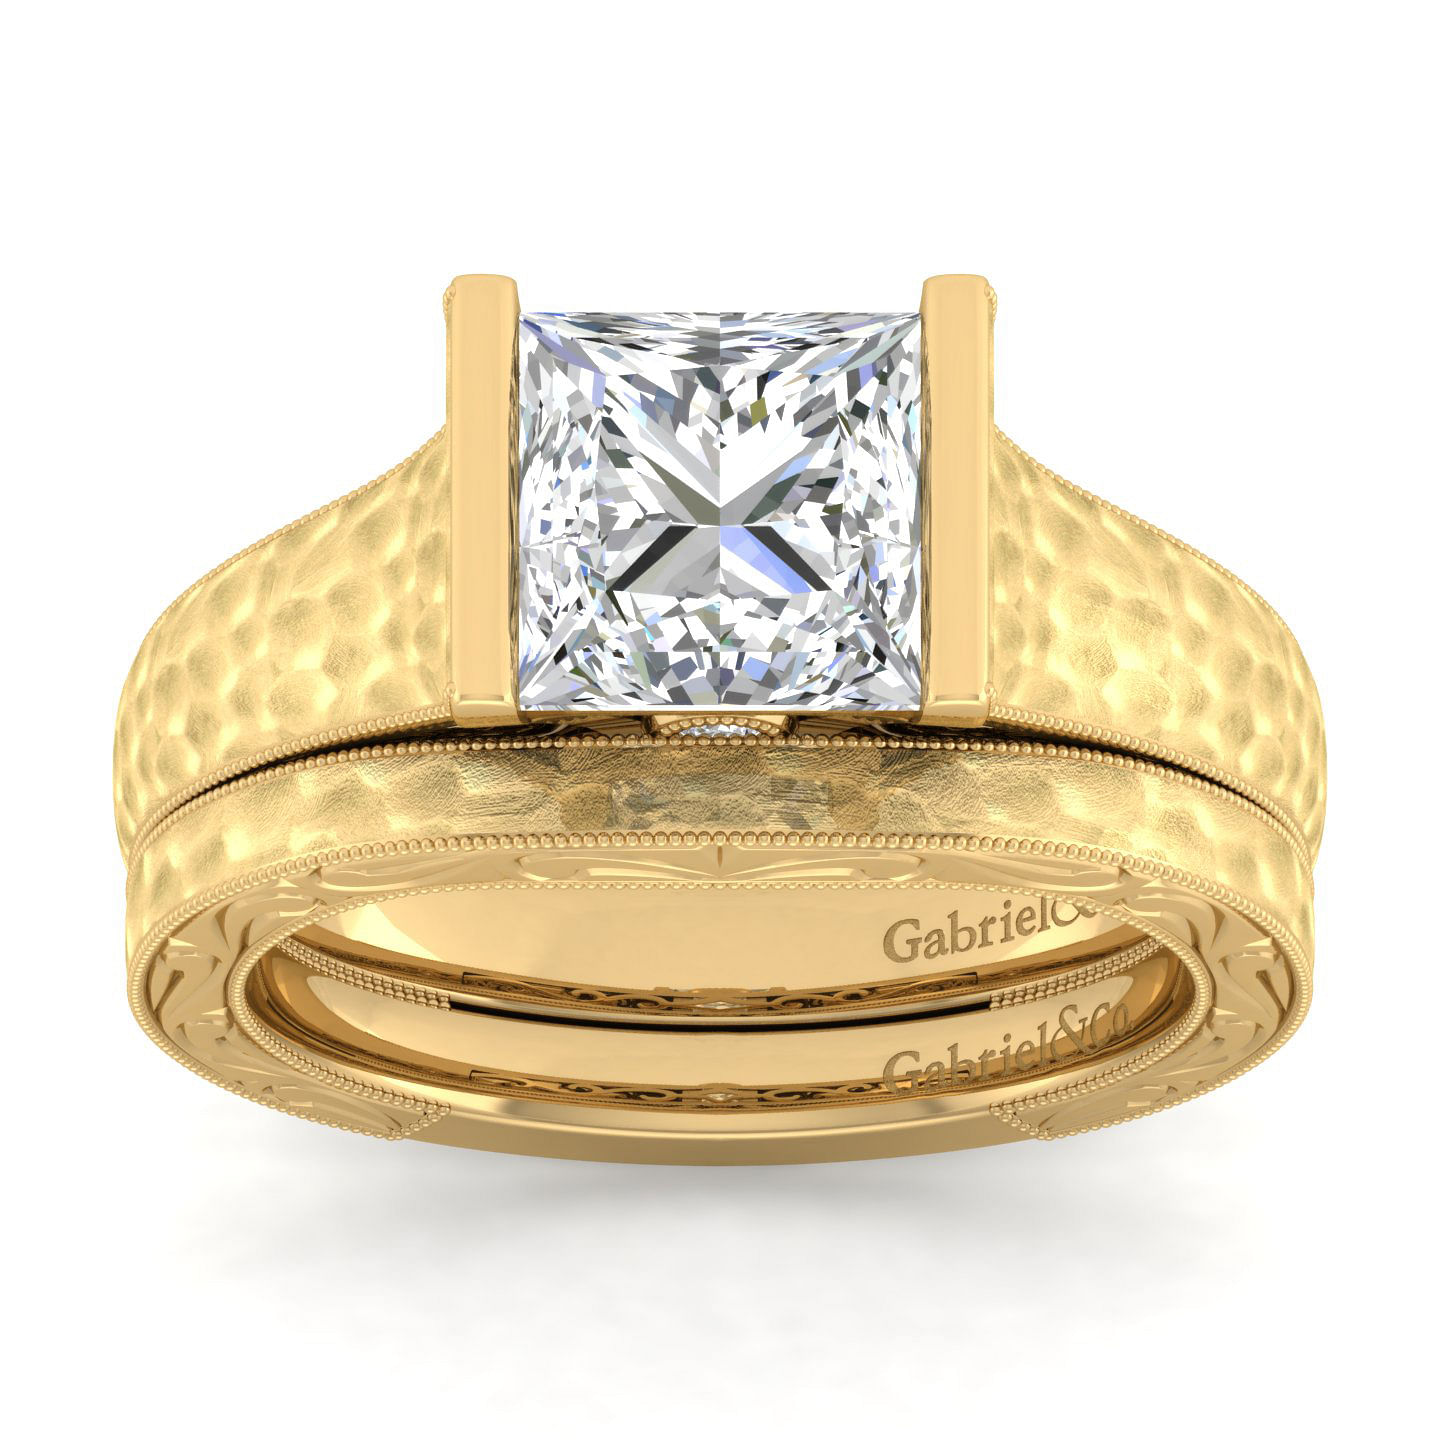 Vintage Inspired 14K Yellow Gold Princess Cut Diamond Engagement Ring